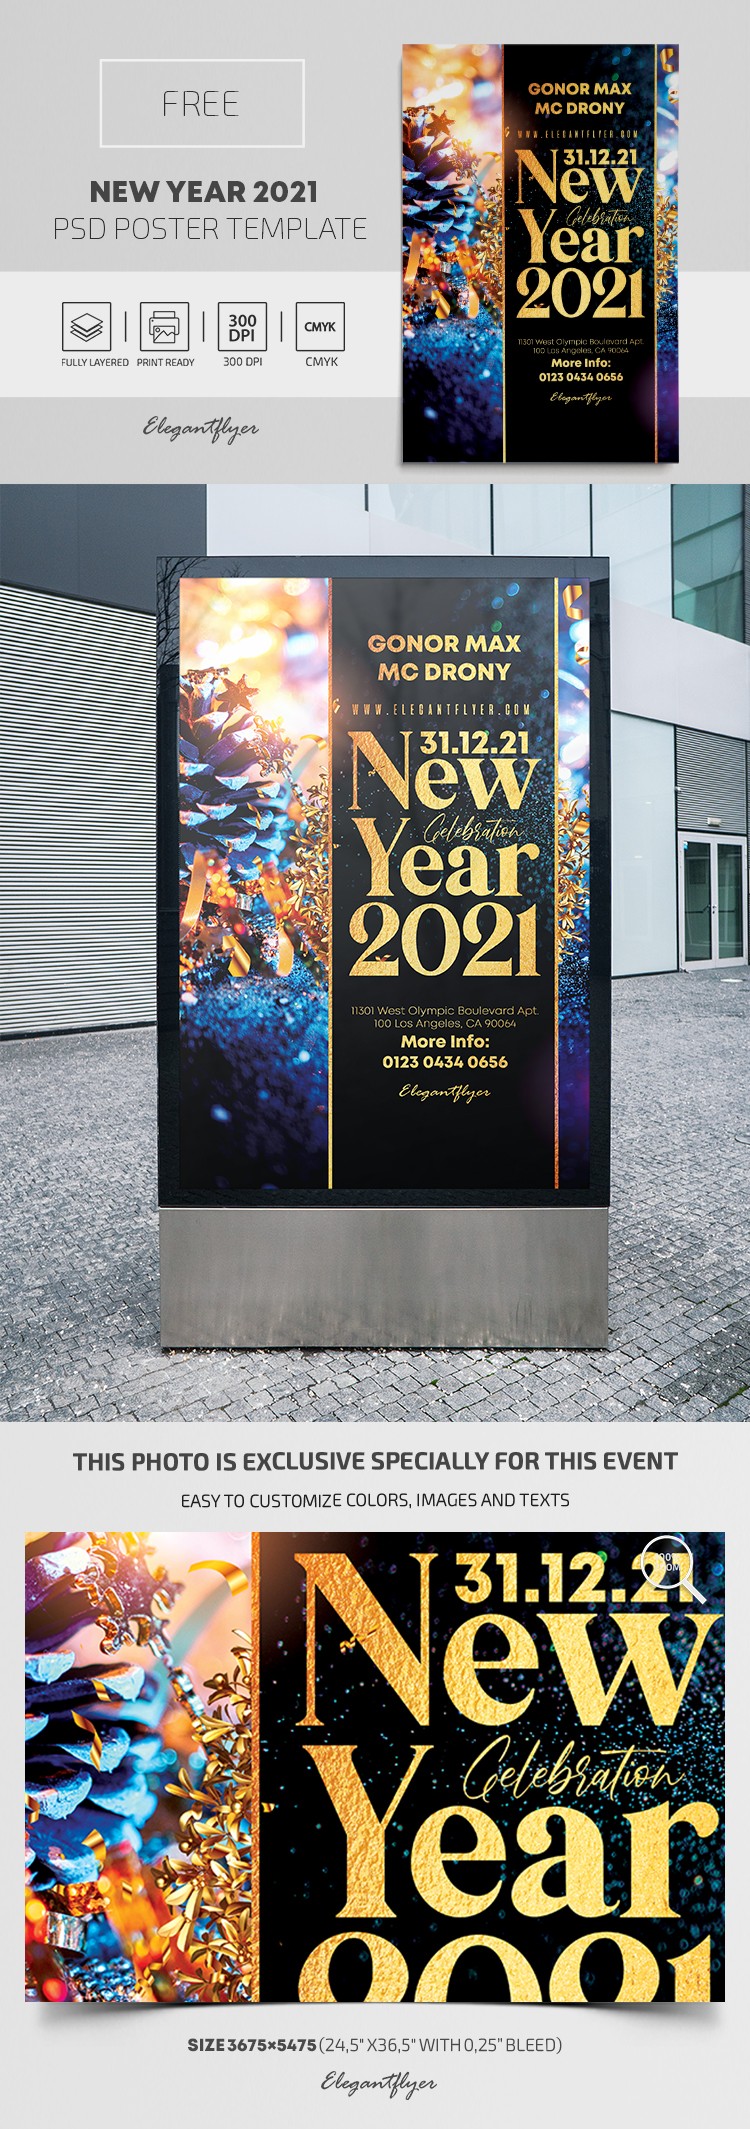 Affiche du Nouvel An 2021 by ElegantFlyer